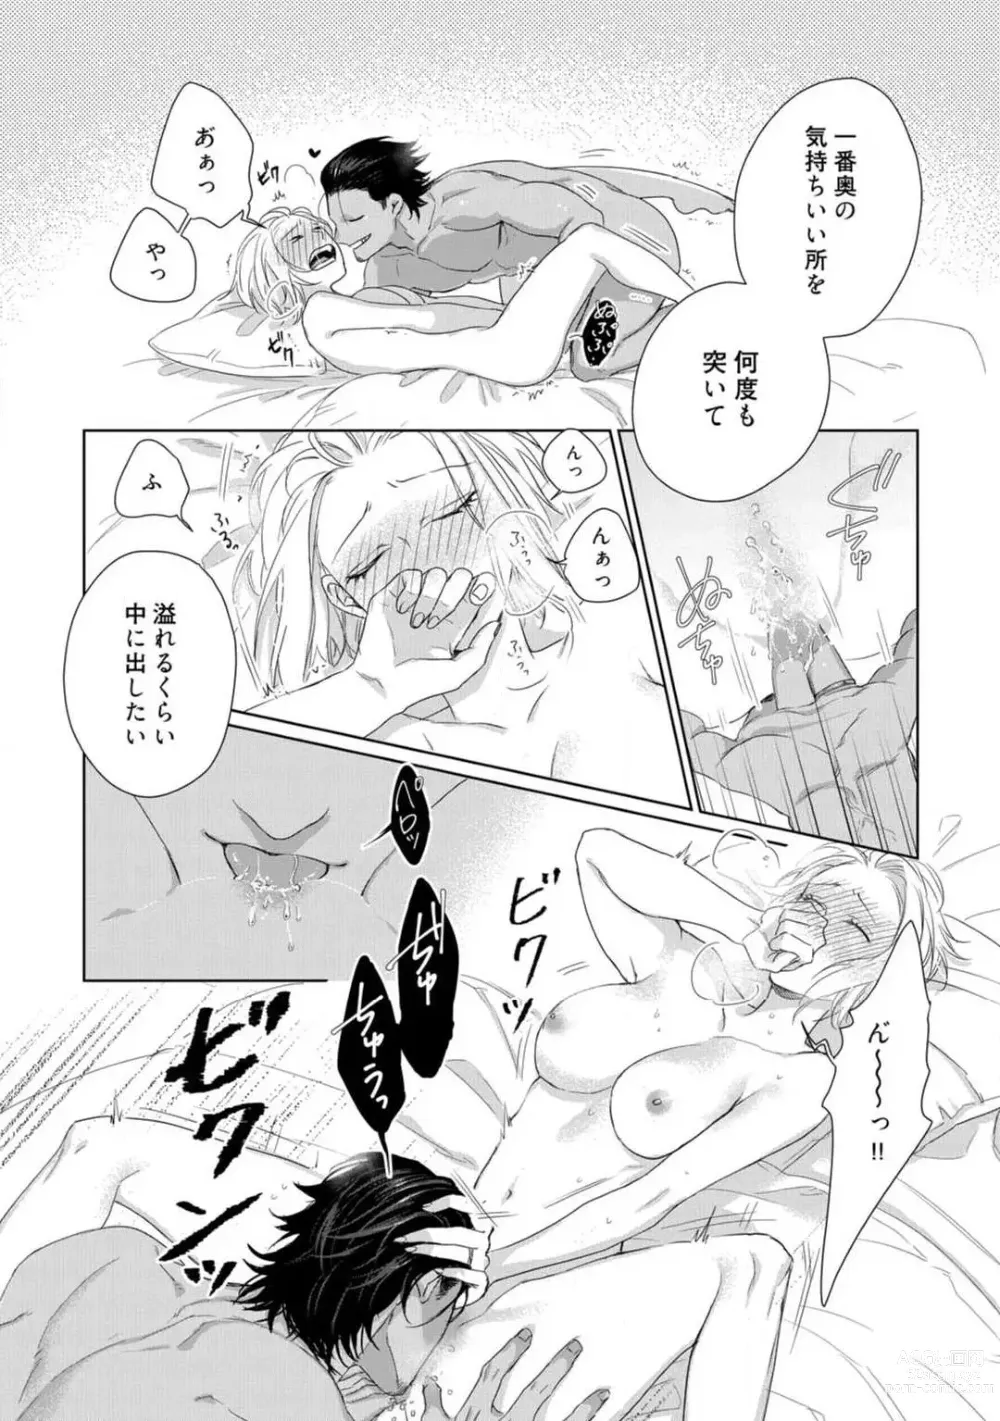 Page 331 of manga Kamidanomi Konkatsu 1-12